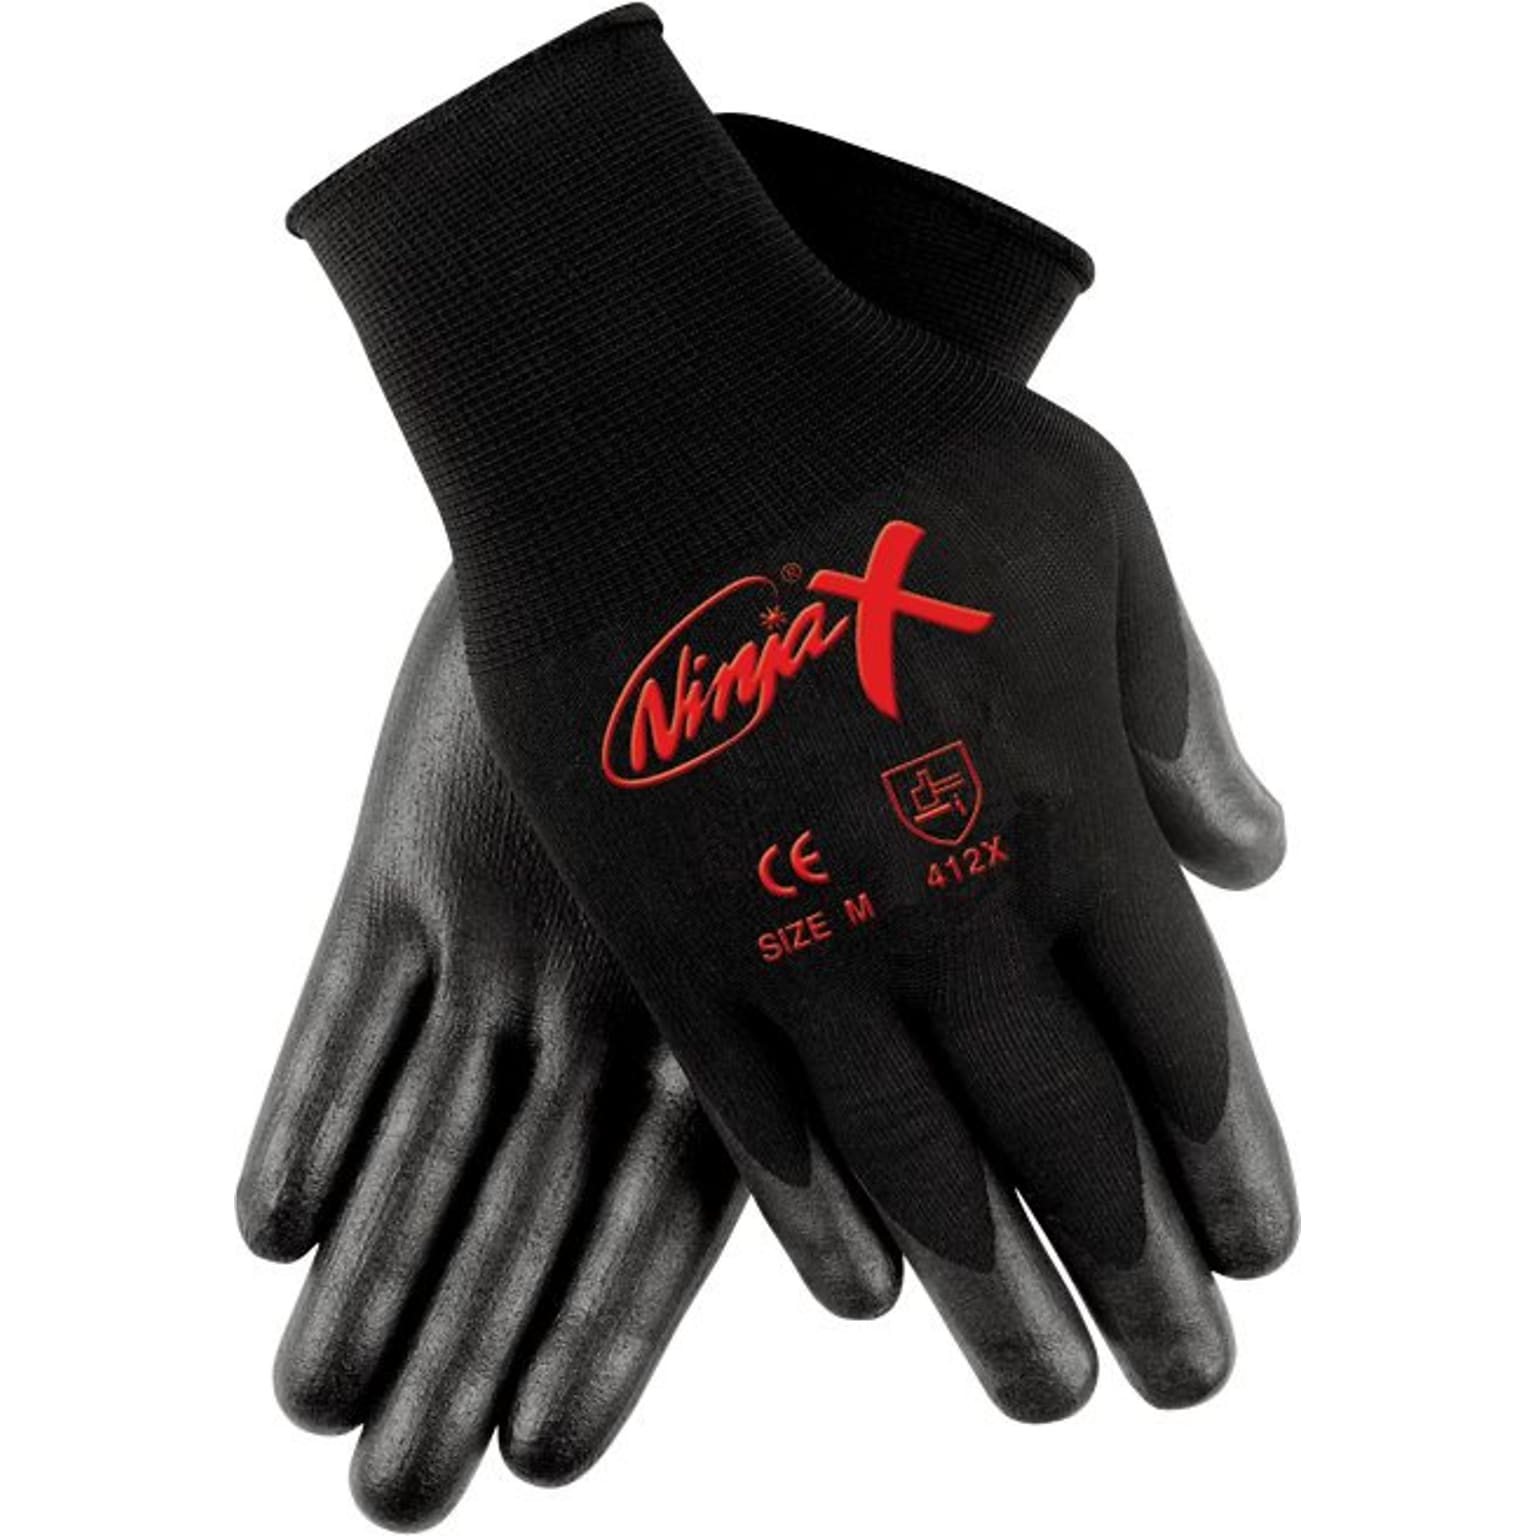 Memphis™ Ninja x® Bi-Polymer Coated Gloves, Large, Black, Pair